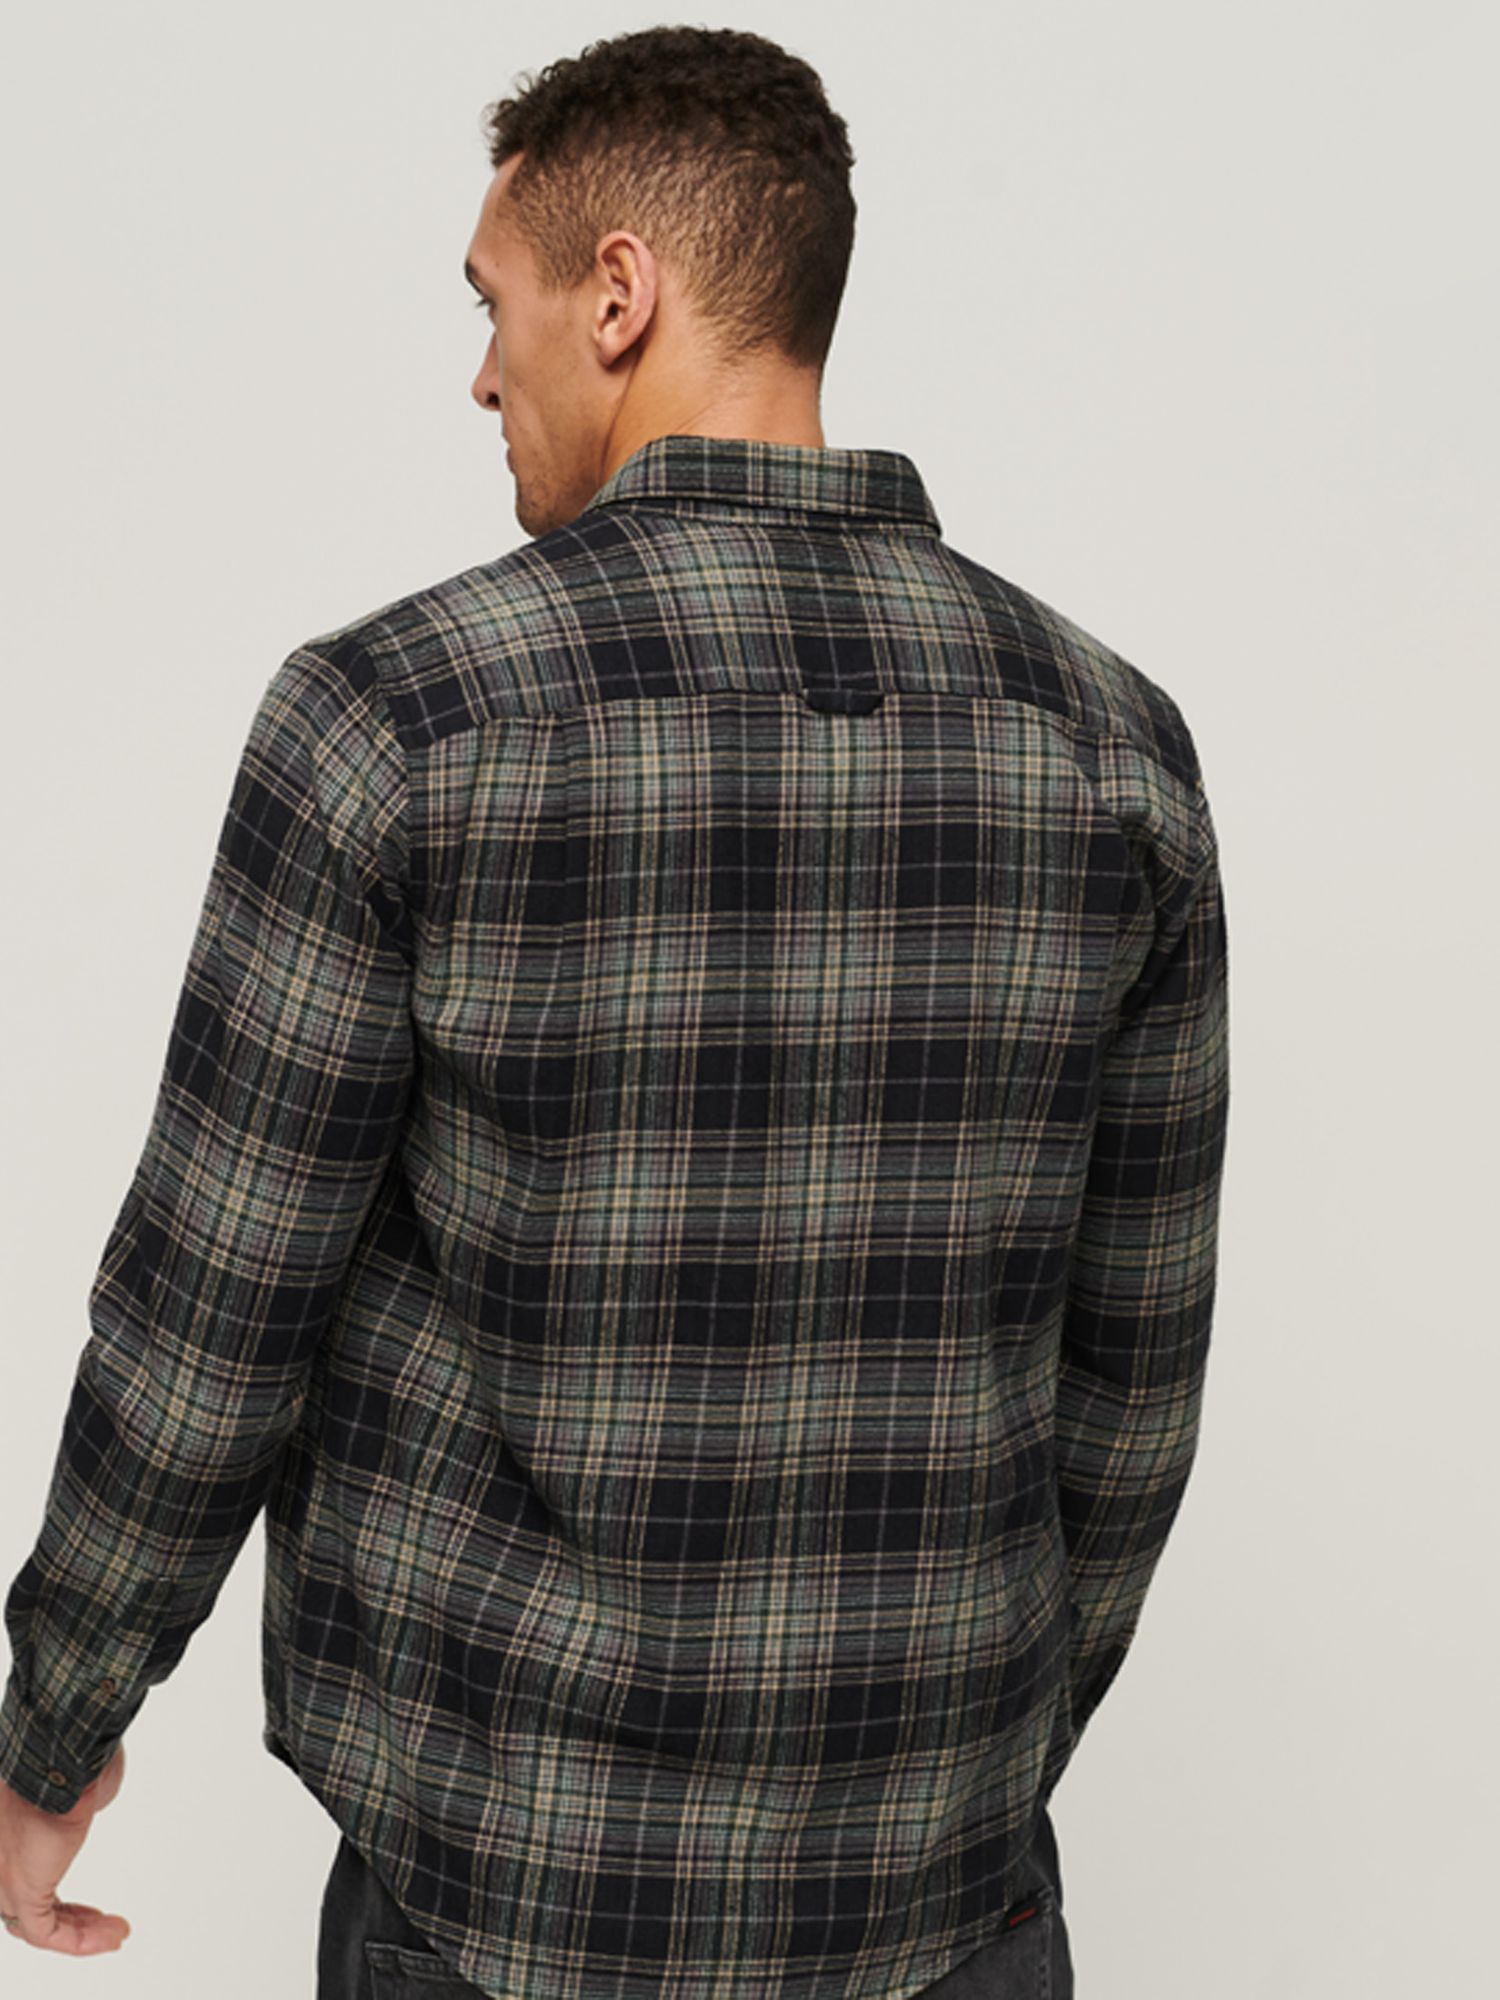 Superdry Organic Cotton Long Sleeve Lumberjack Shirt, Drayton Check Black, S